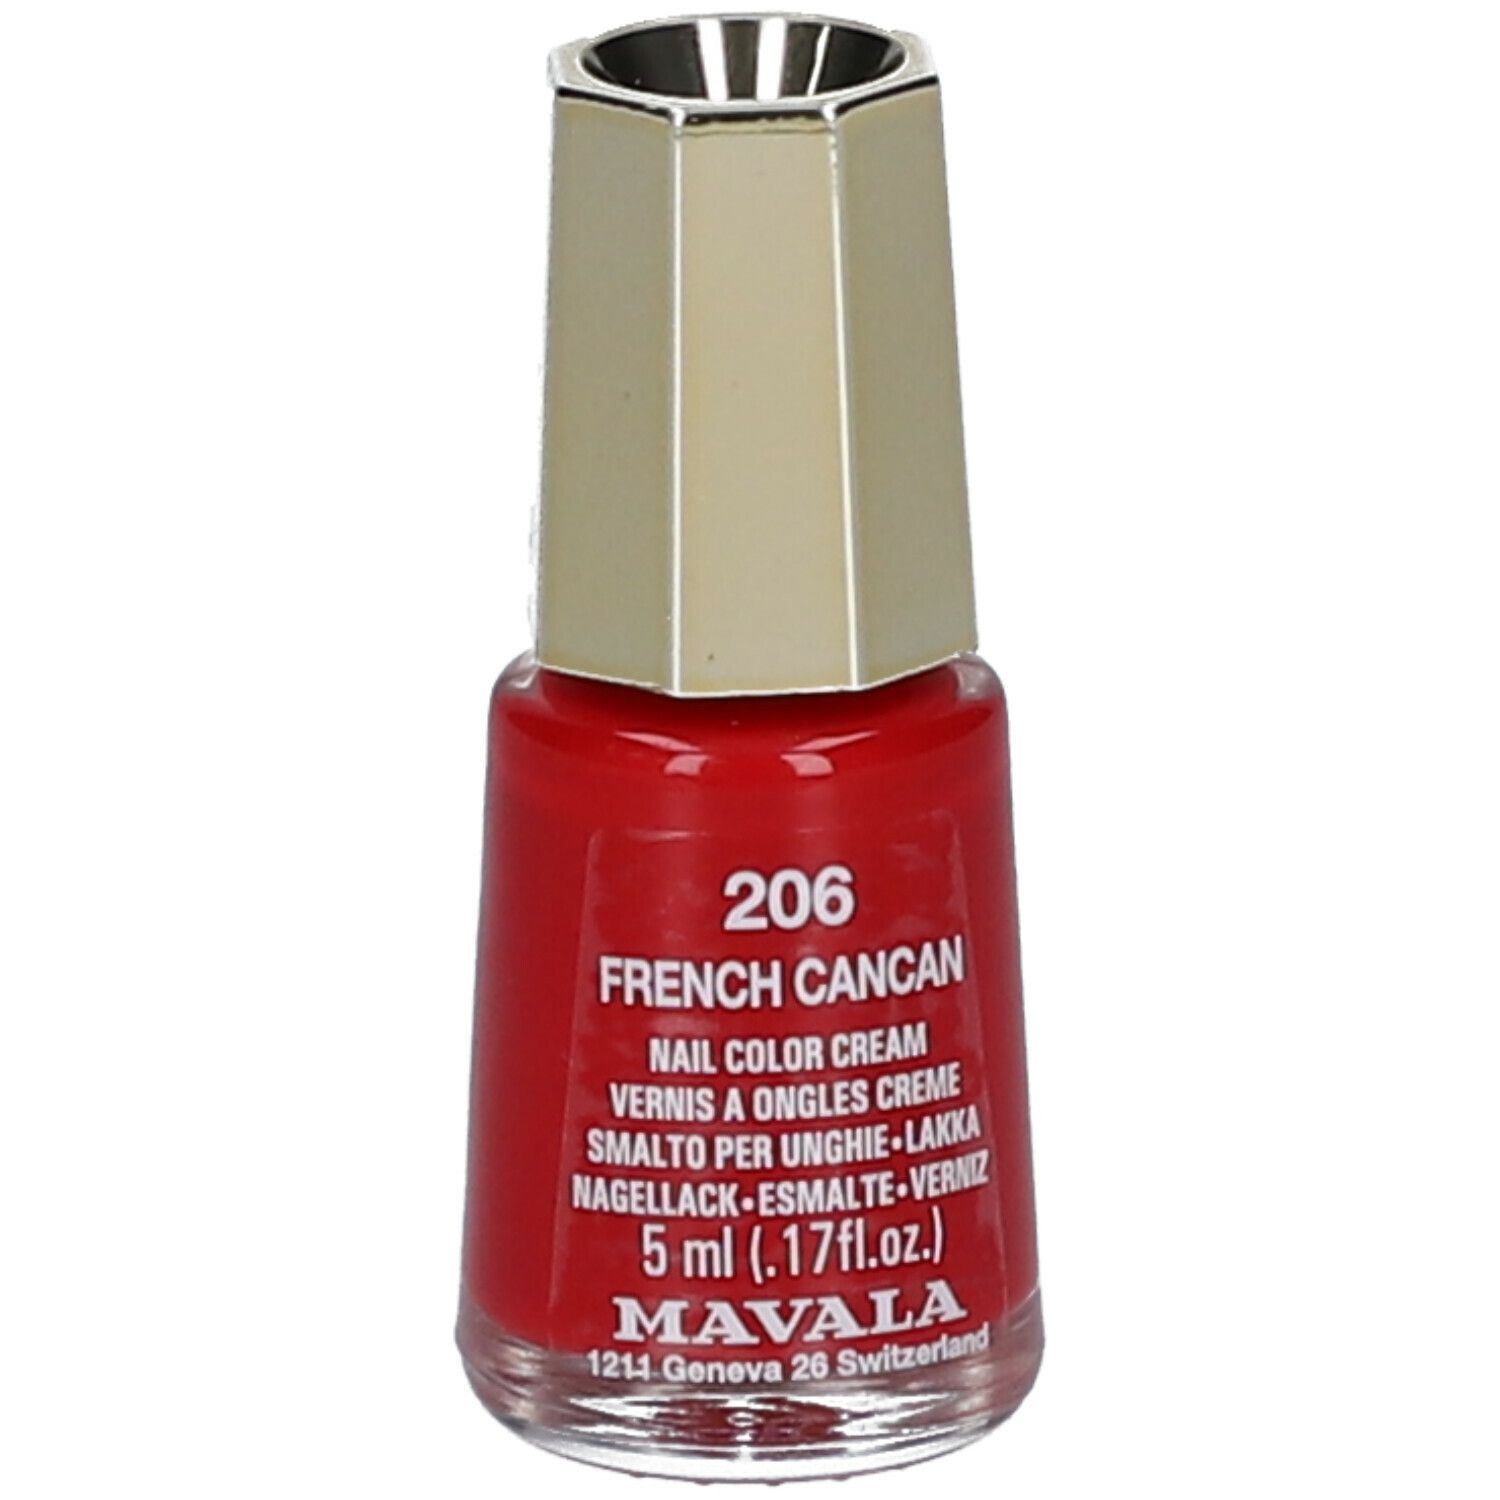 Mavala Mini Color vernis à ongles crème - French Cancan 206